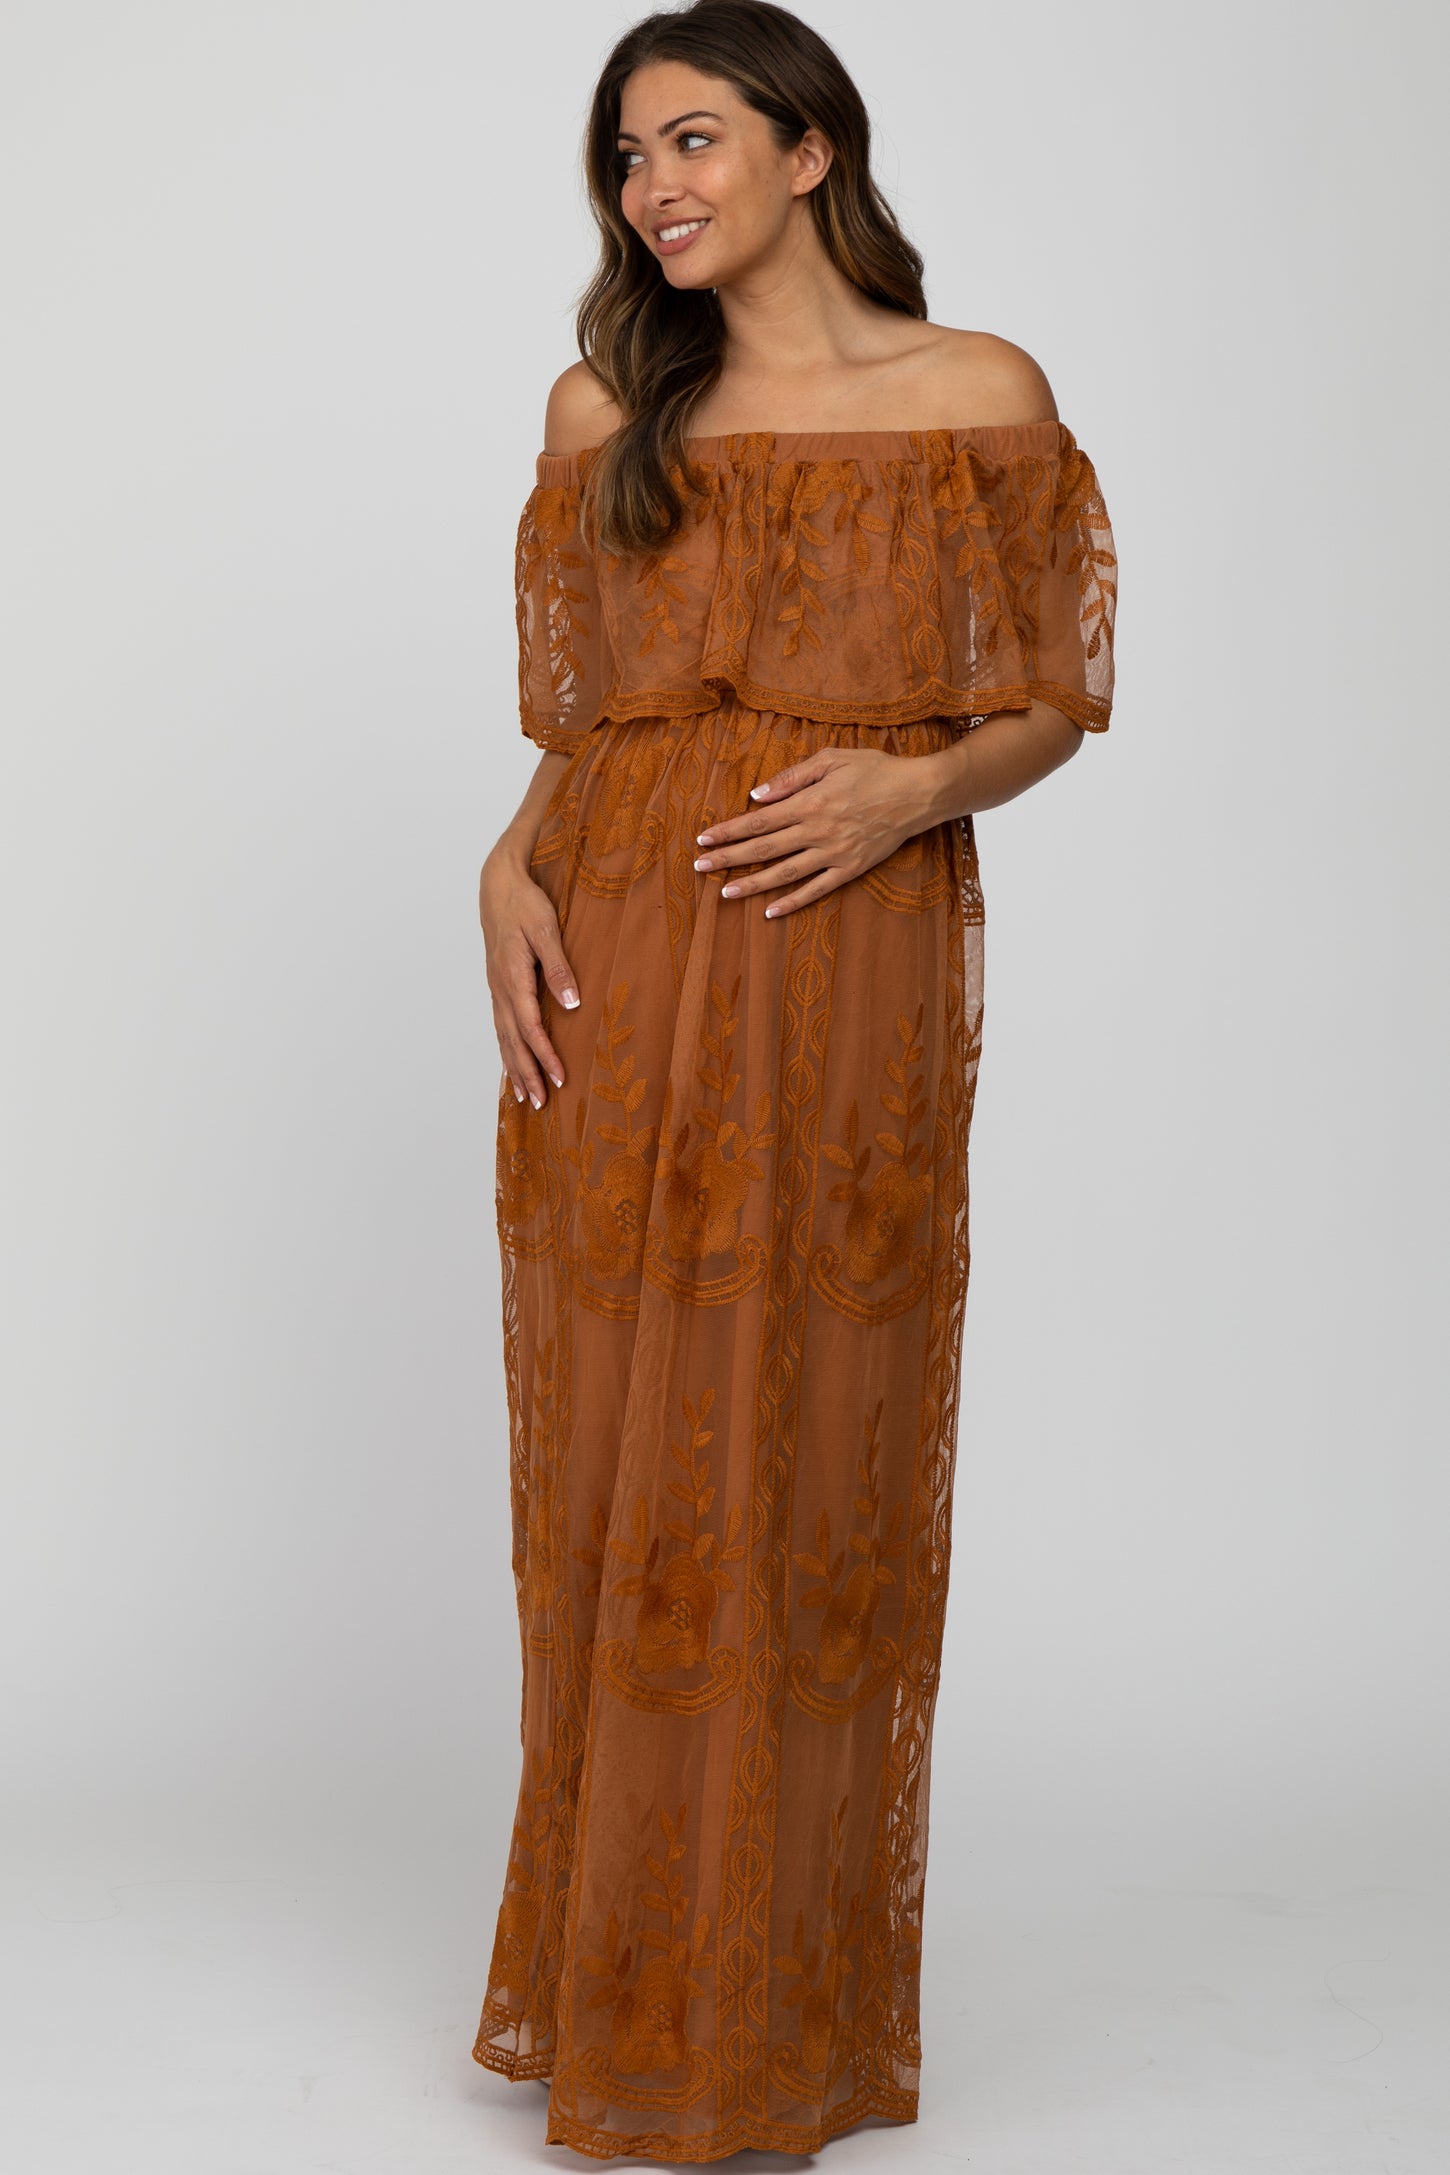 Camel Lace Overlay Off Shoulder Flounce Maternity Maxi Dress